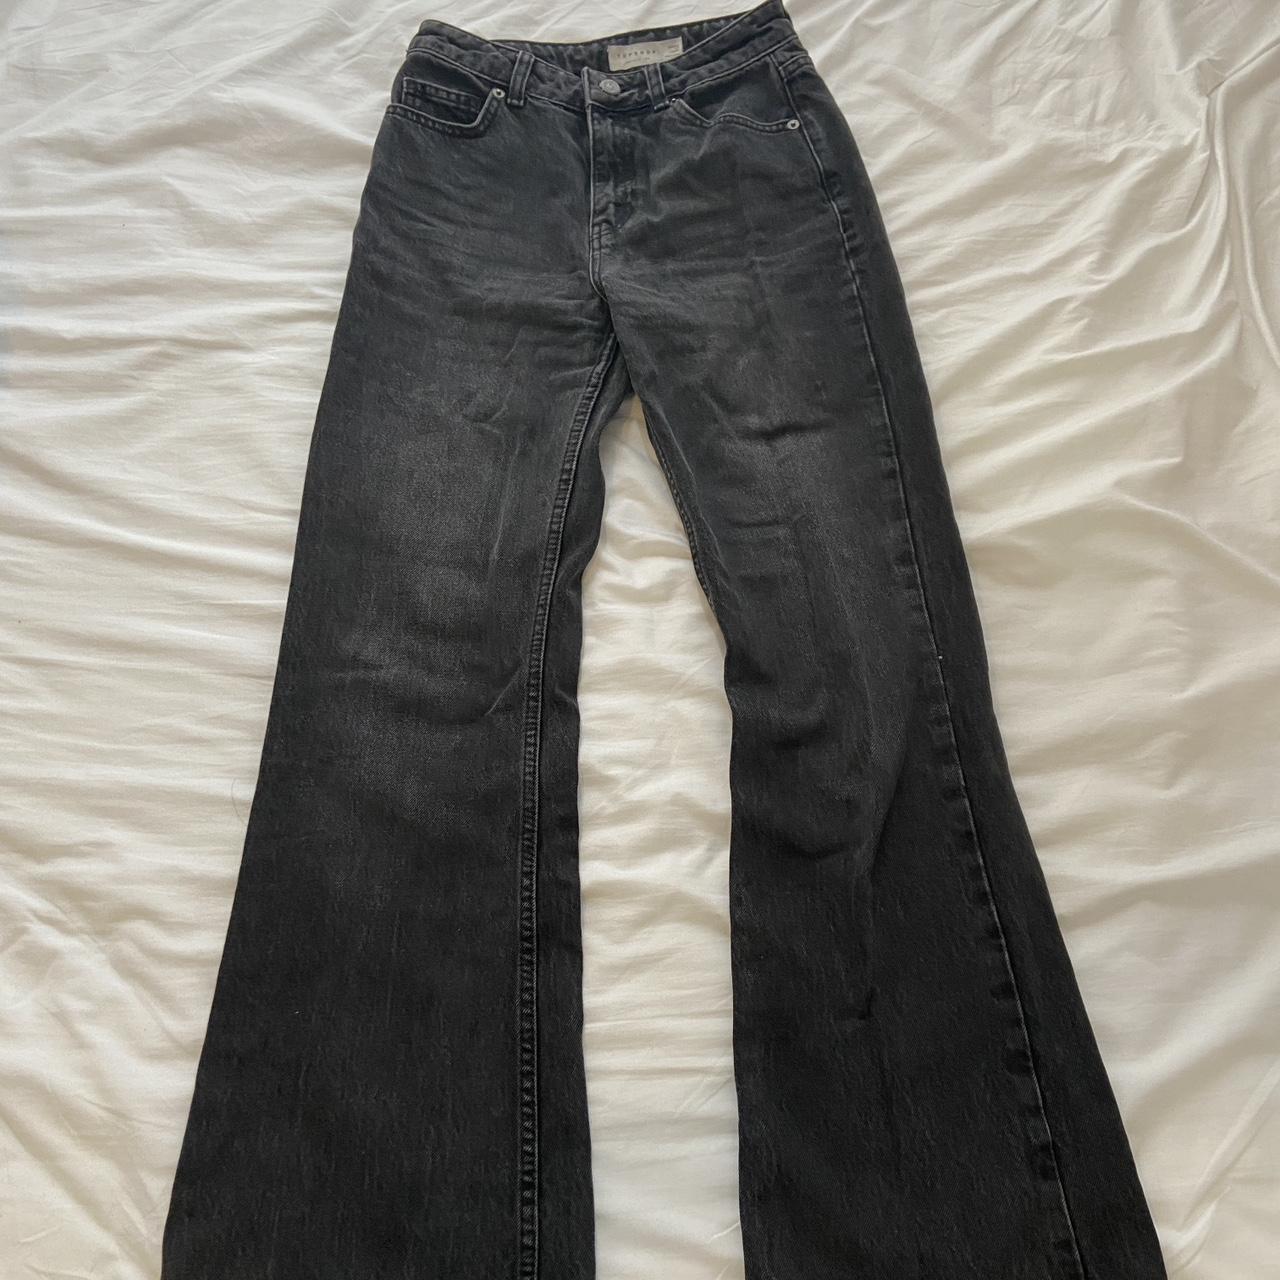 Topshop 90s jeans in washed black size 25 (fits... - Depop